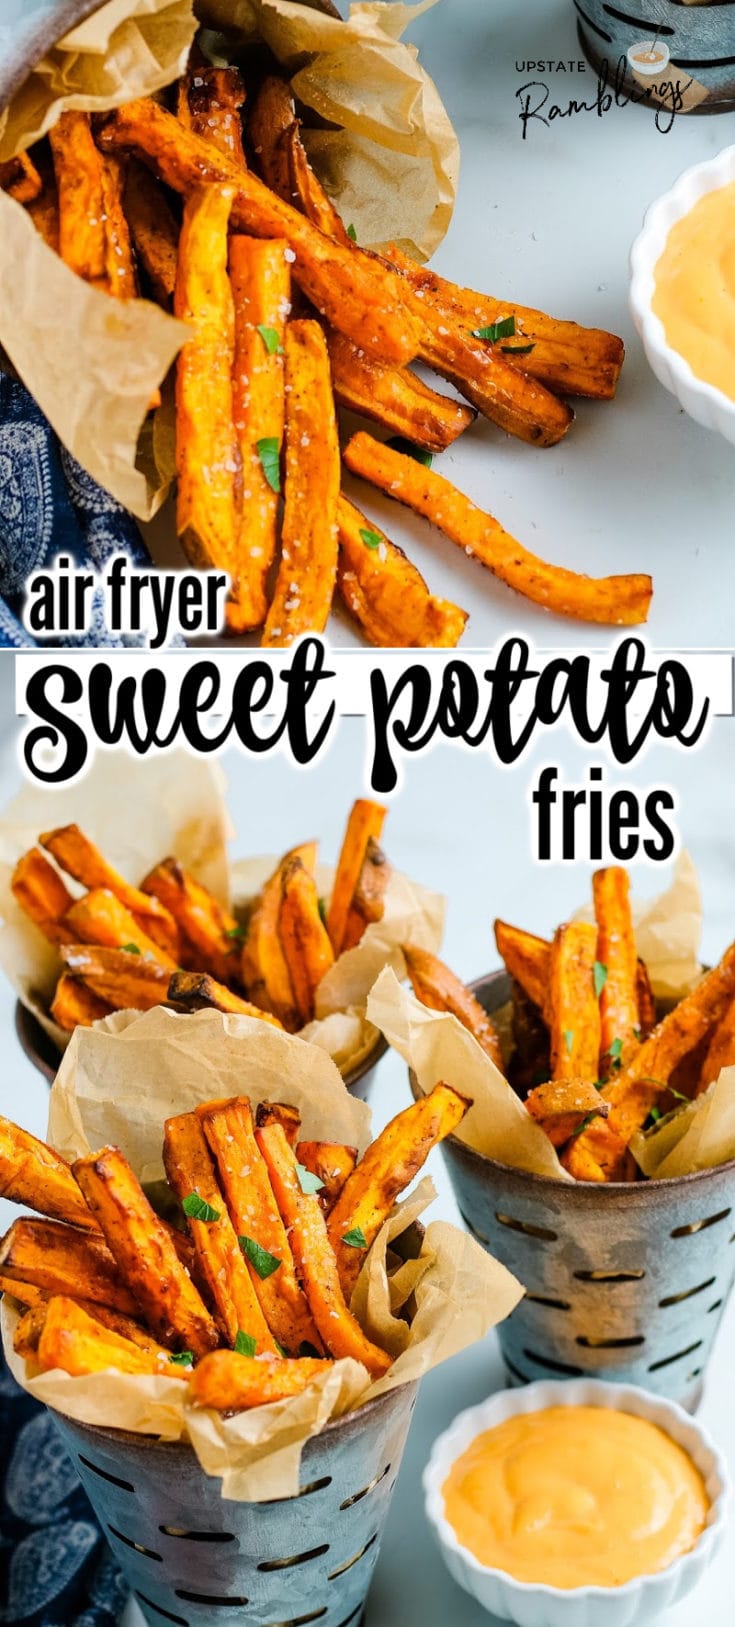 How to Make Air Fryer Sweet Potato Fries - Upstate Ramblings